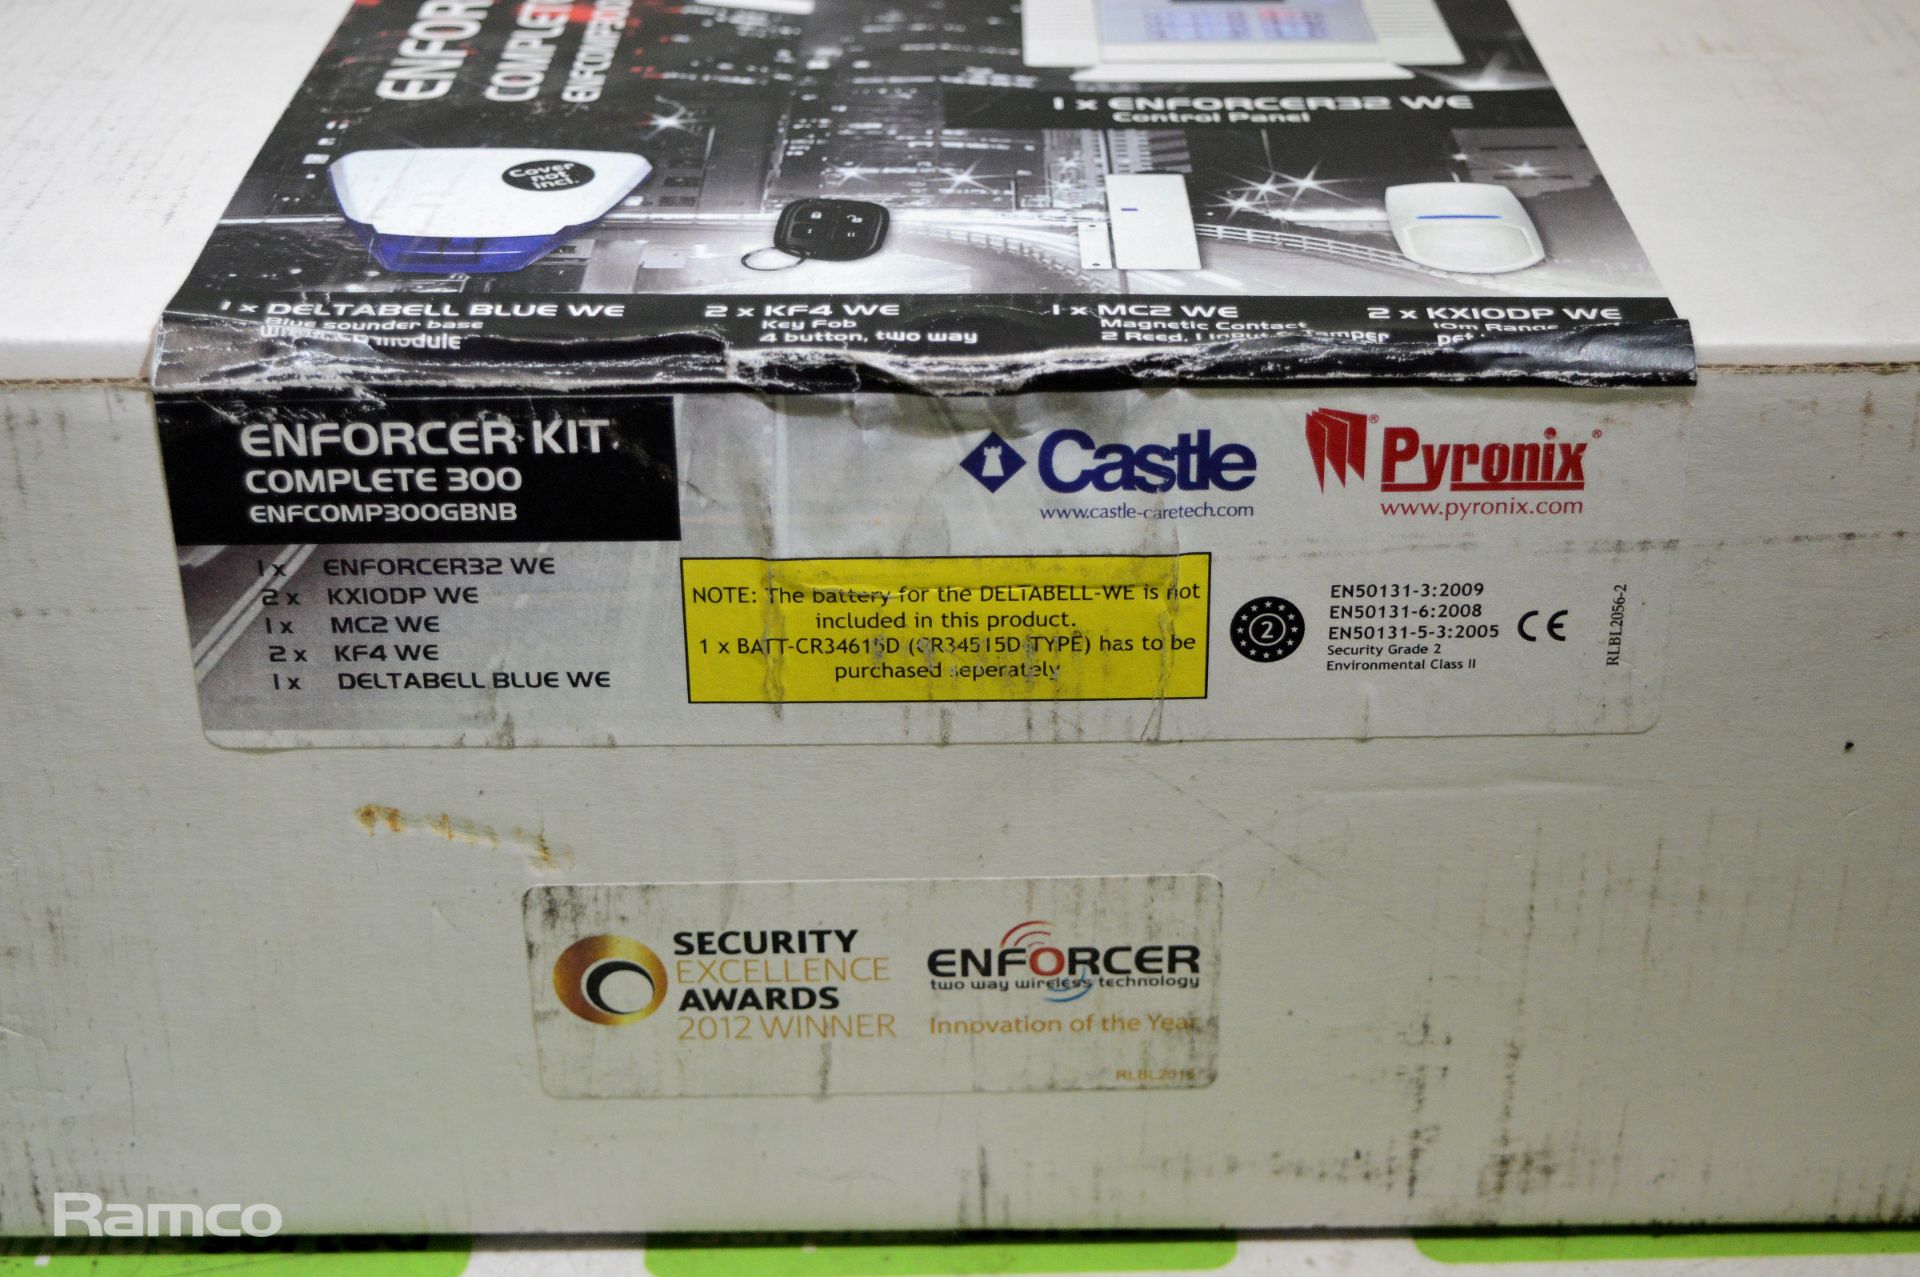 Pyronix Enforcer Kit Complete 300 Security System - Image 3 of 3